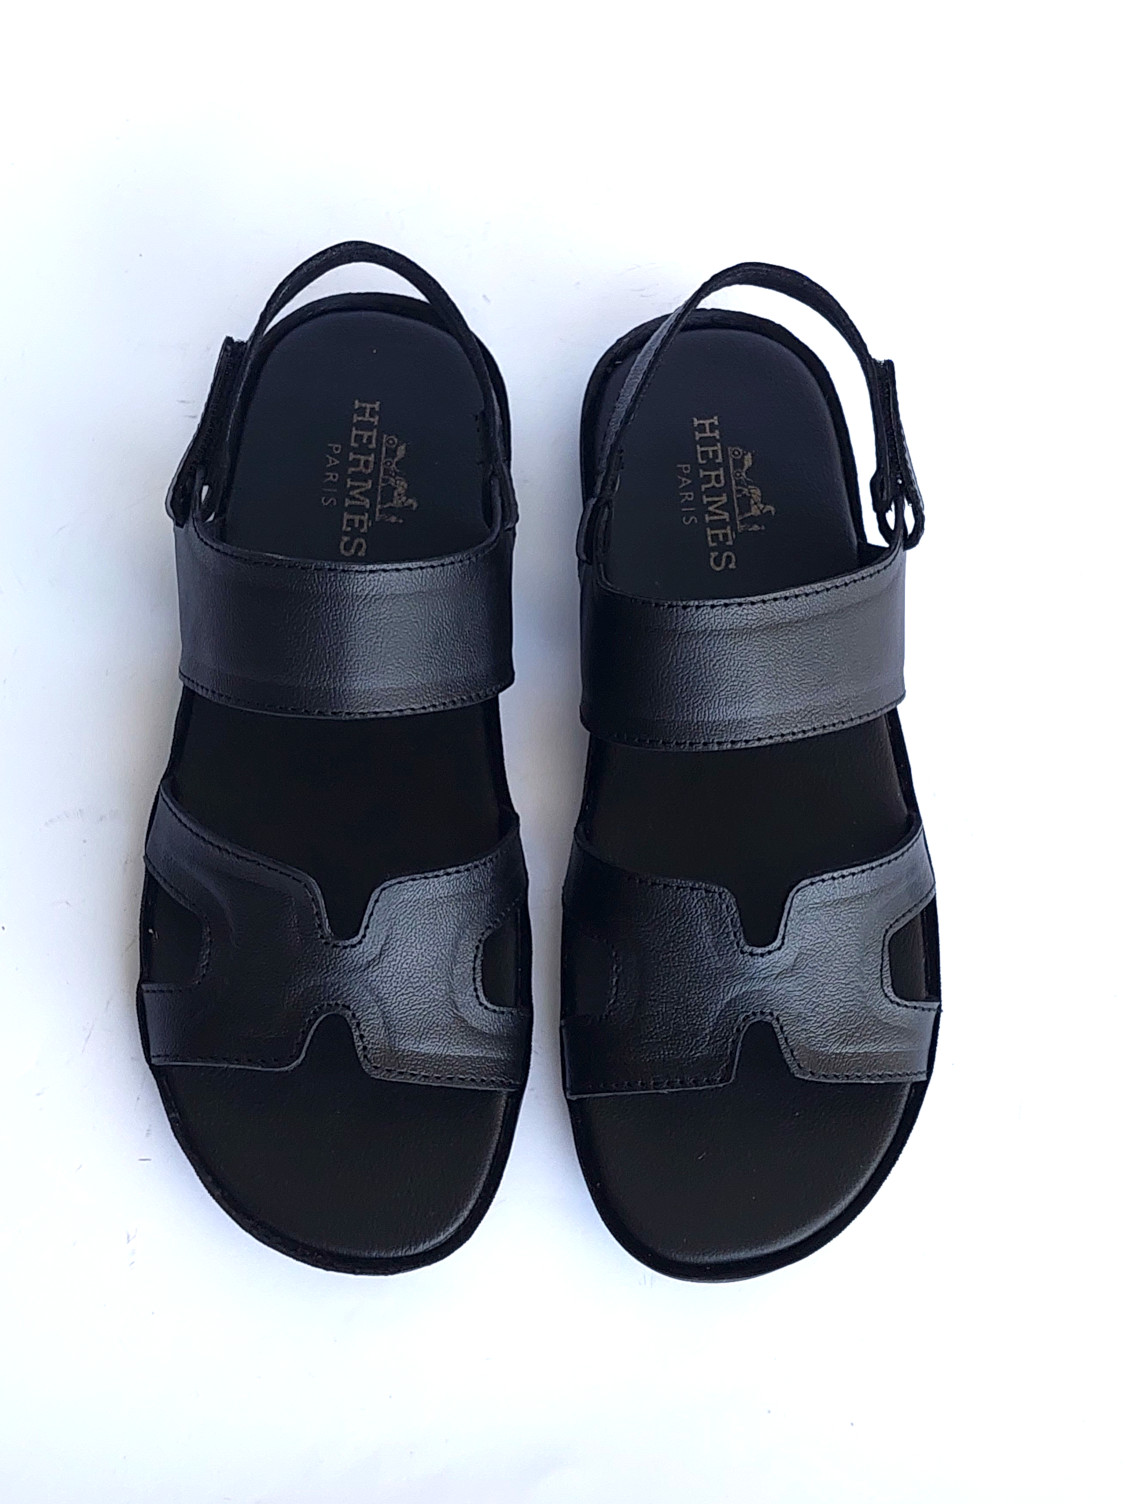 SHMS03-Branded Milled Leather Luxury Sandals - Black - Frenzy